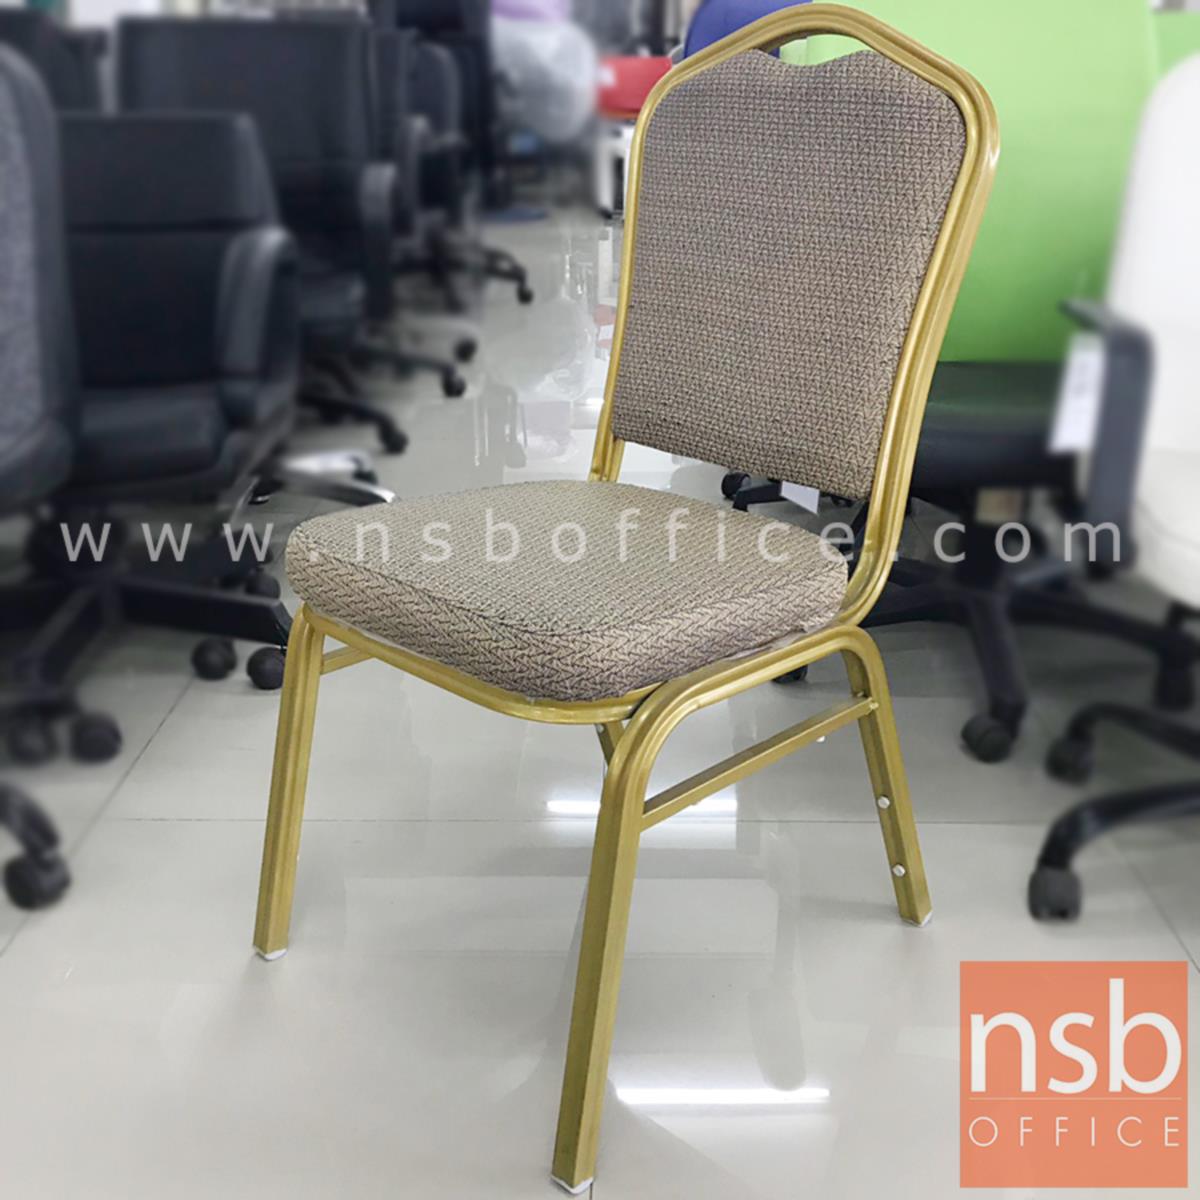 L02A295:เก้าอี้โมเดิร์นหุ้มผ้า รุ่น NSB-CHAIR10 ขนาด 43W*90H cm. โครงสีทอง (STOCK-1 ตัว)